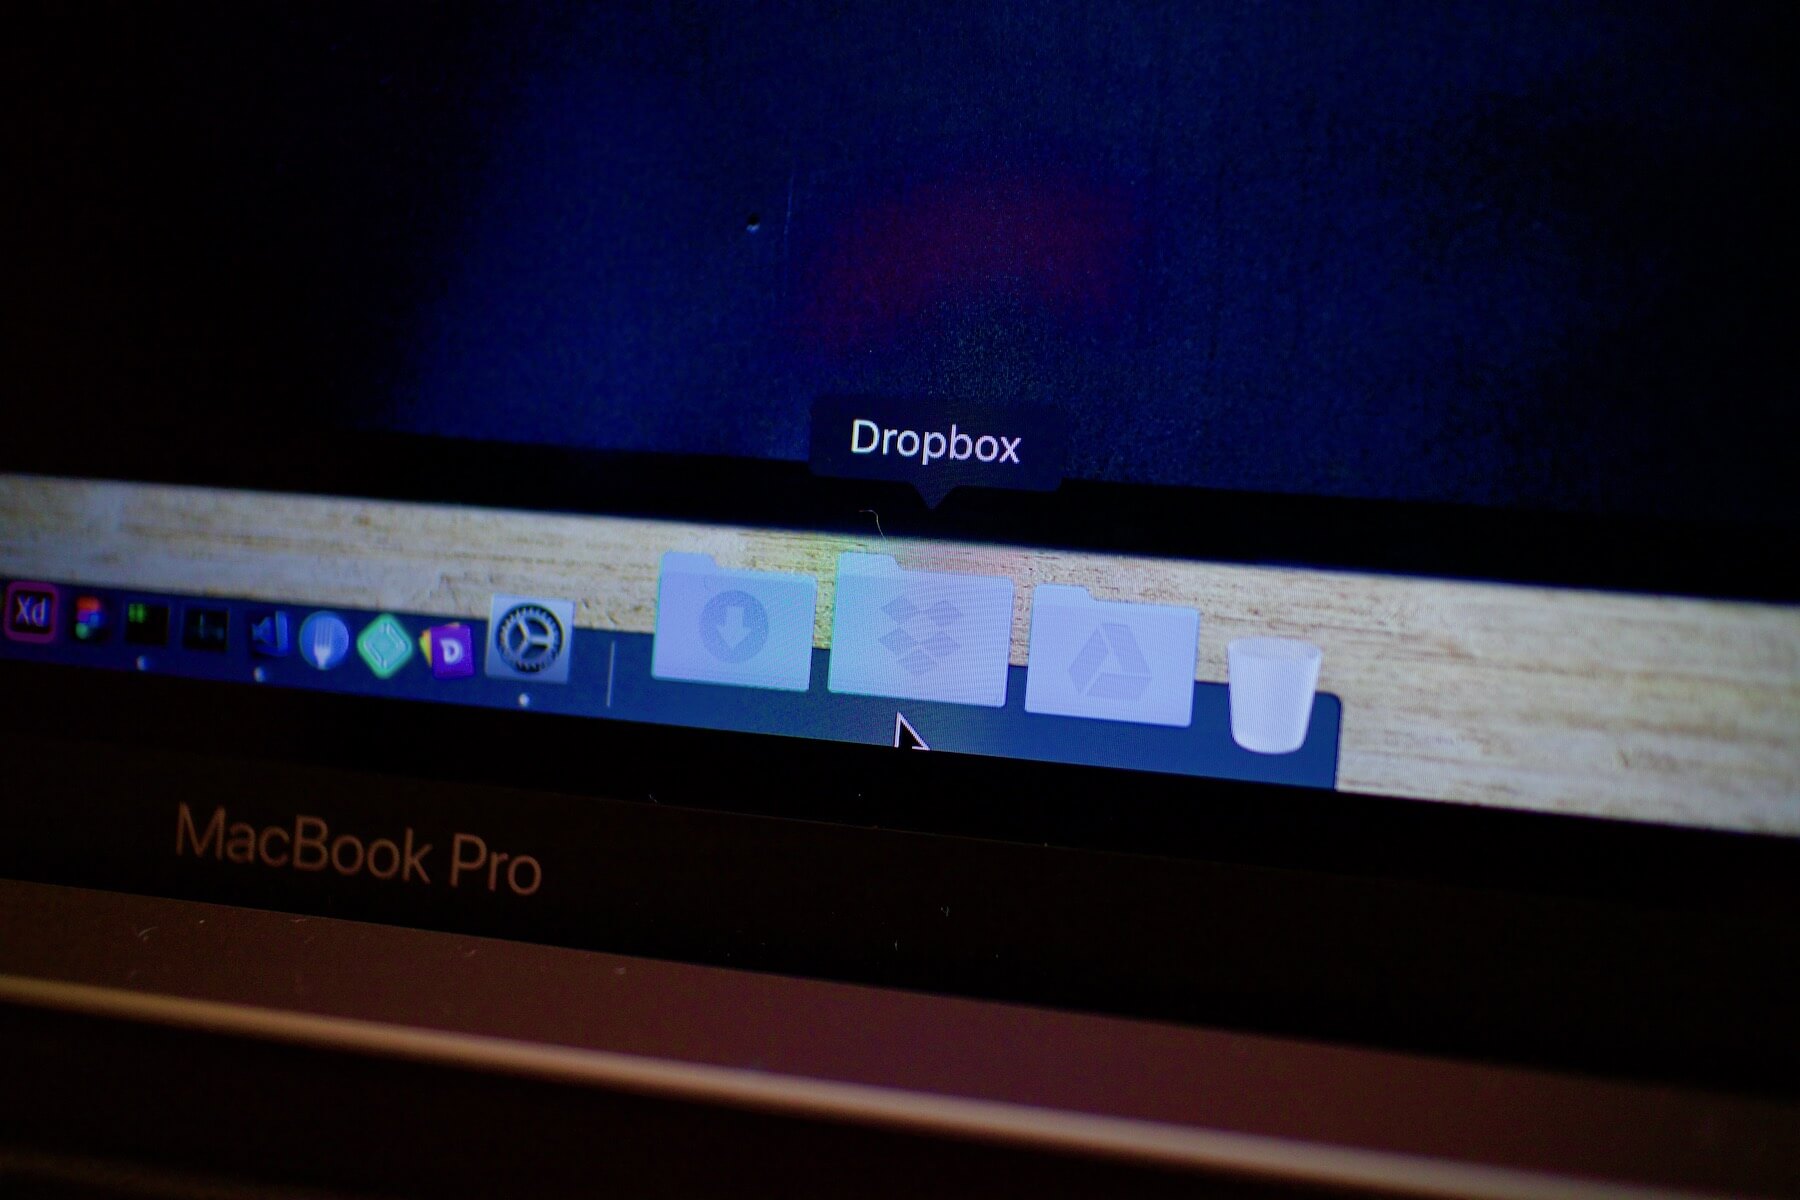 MacBook Pro 2018 Dropbox